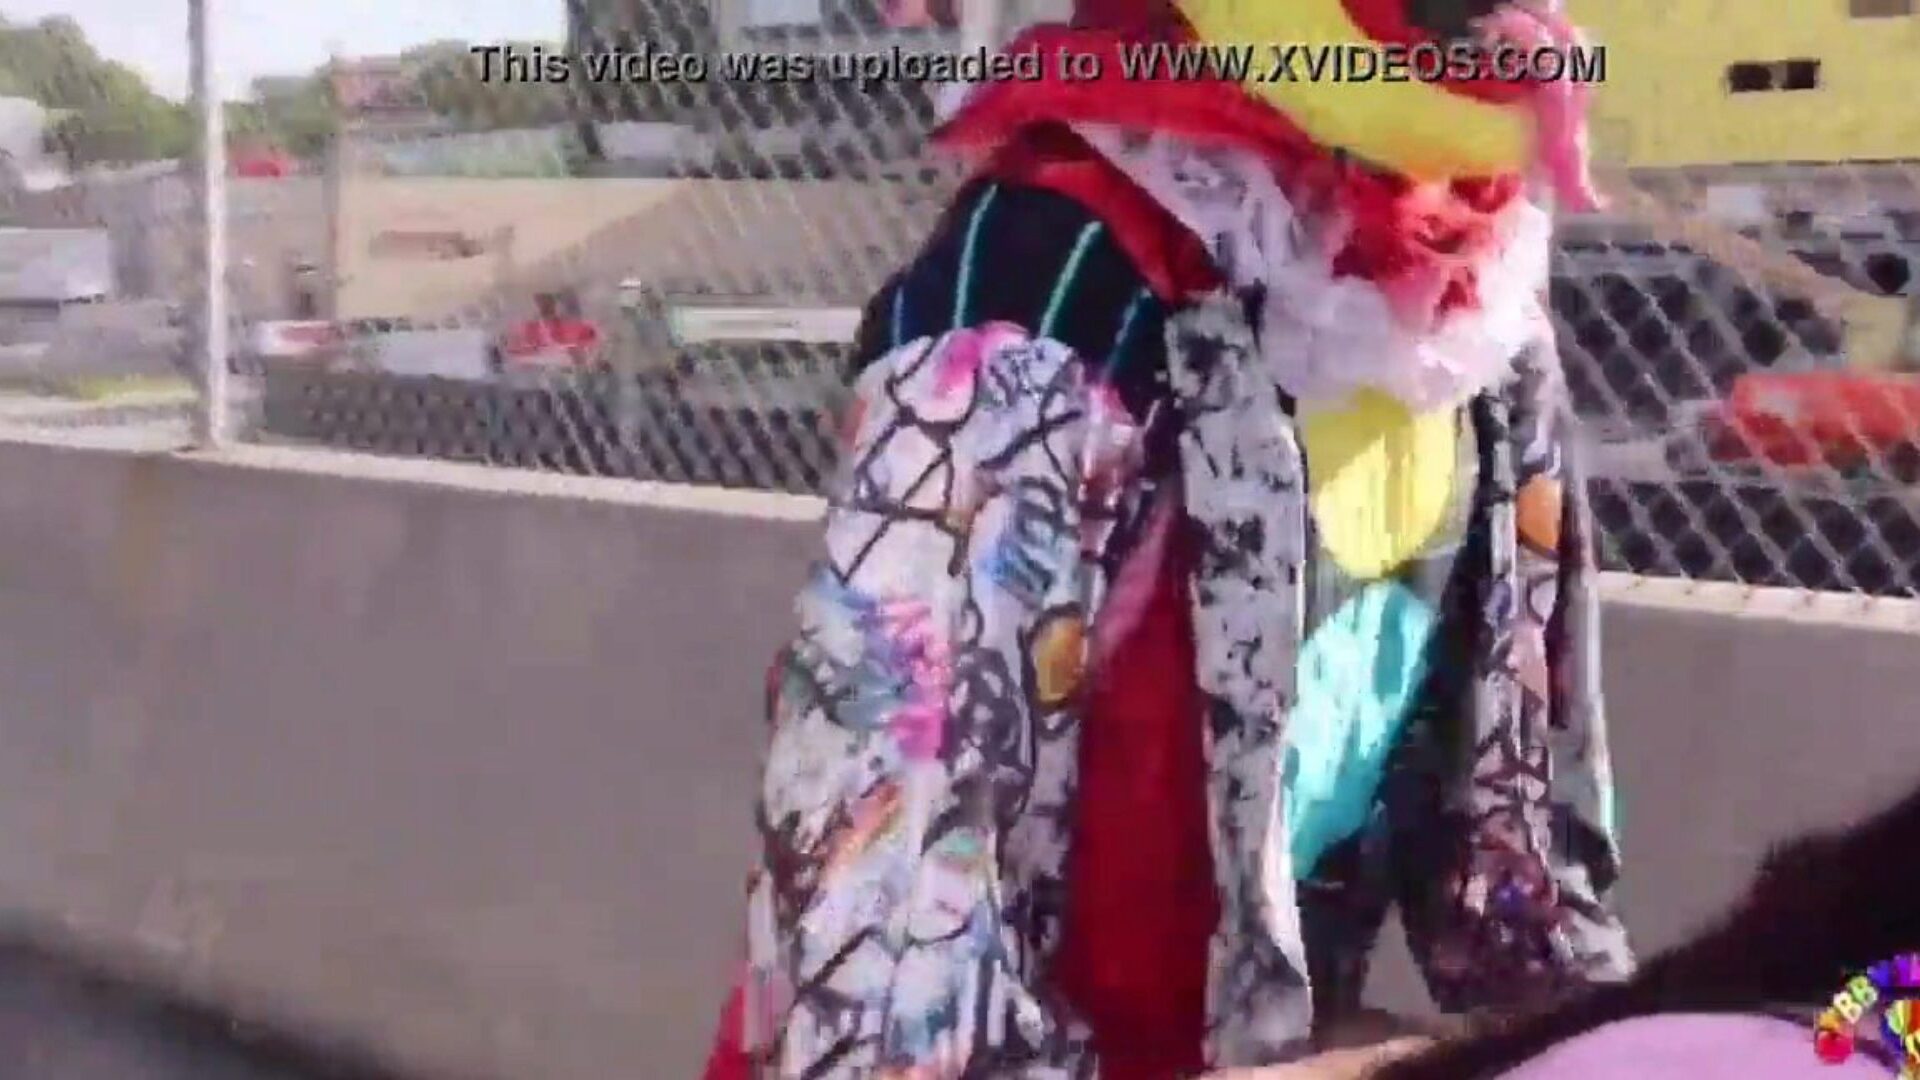 клоун гибби трахает сочную футболку на самом популярном шоссе атланты